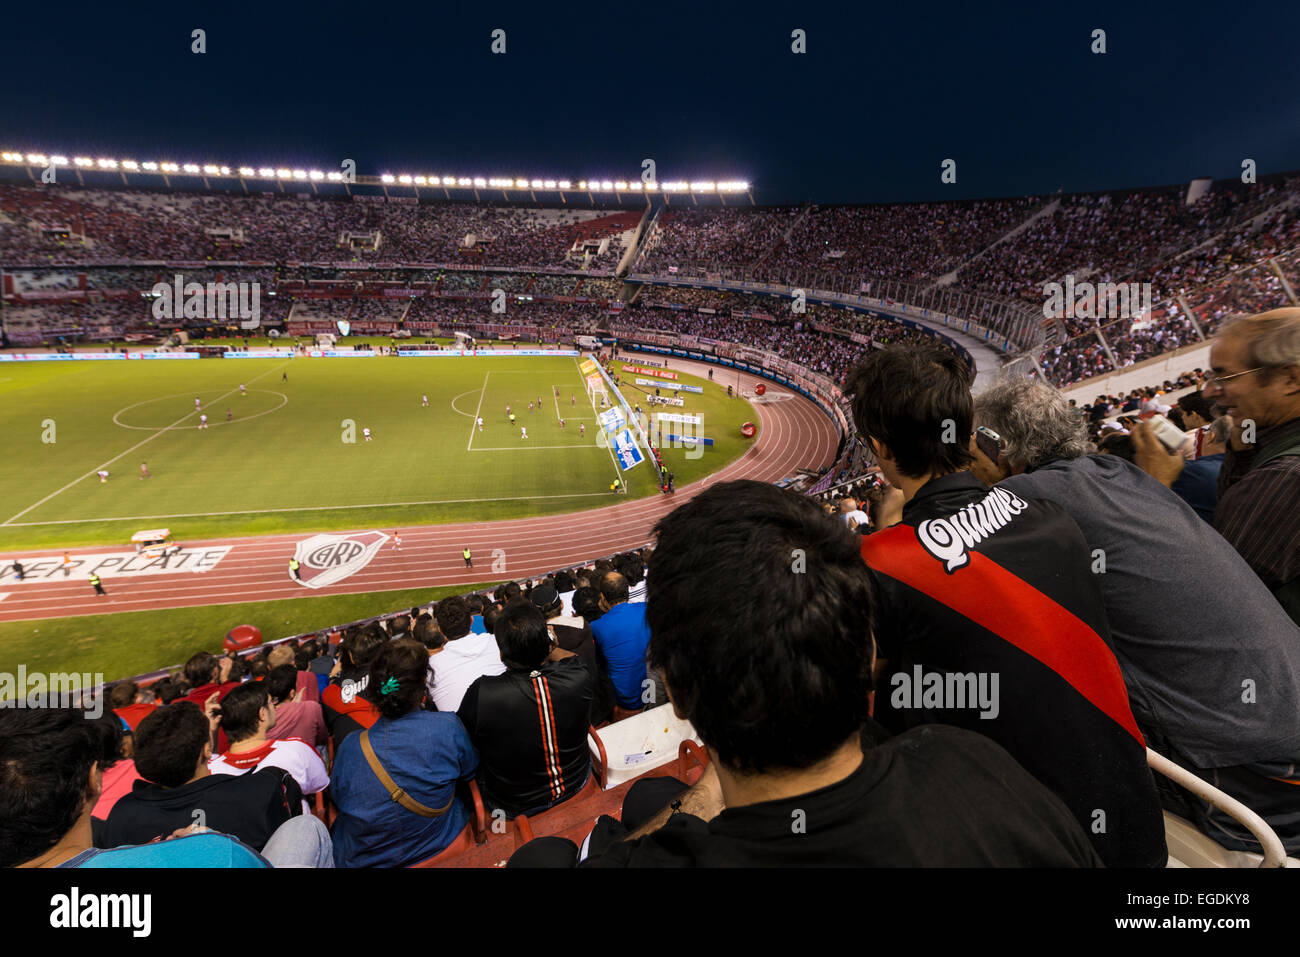 Fans watching River Plate vs Lanús, Estadio Monumental Antonio Vespucio Liberti, Belgrano, Buenos Aires, Argentina Stock Photo